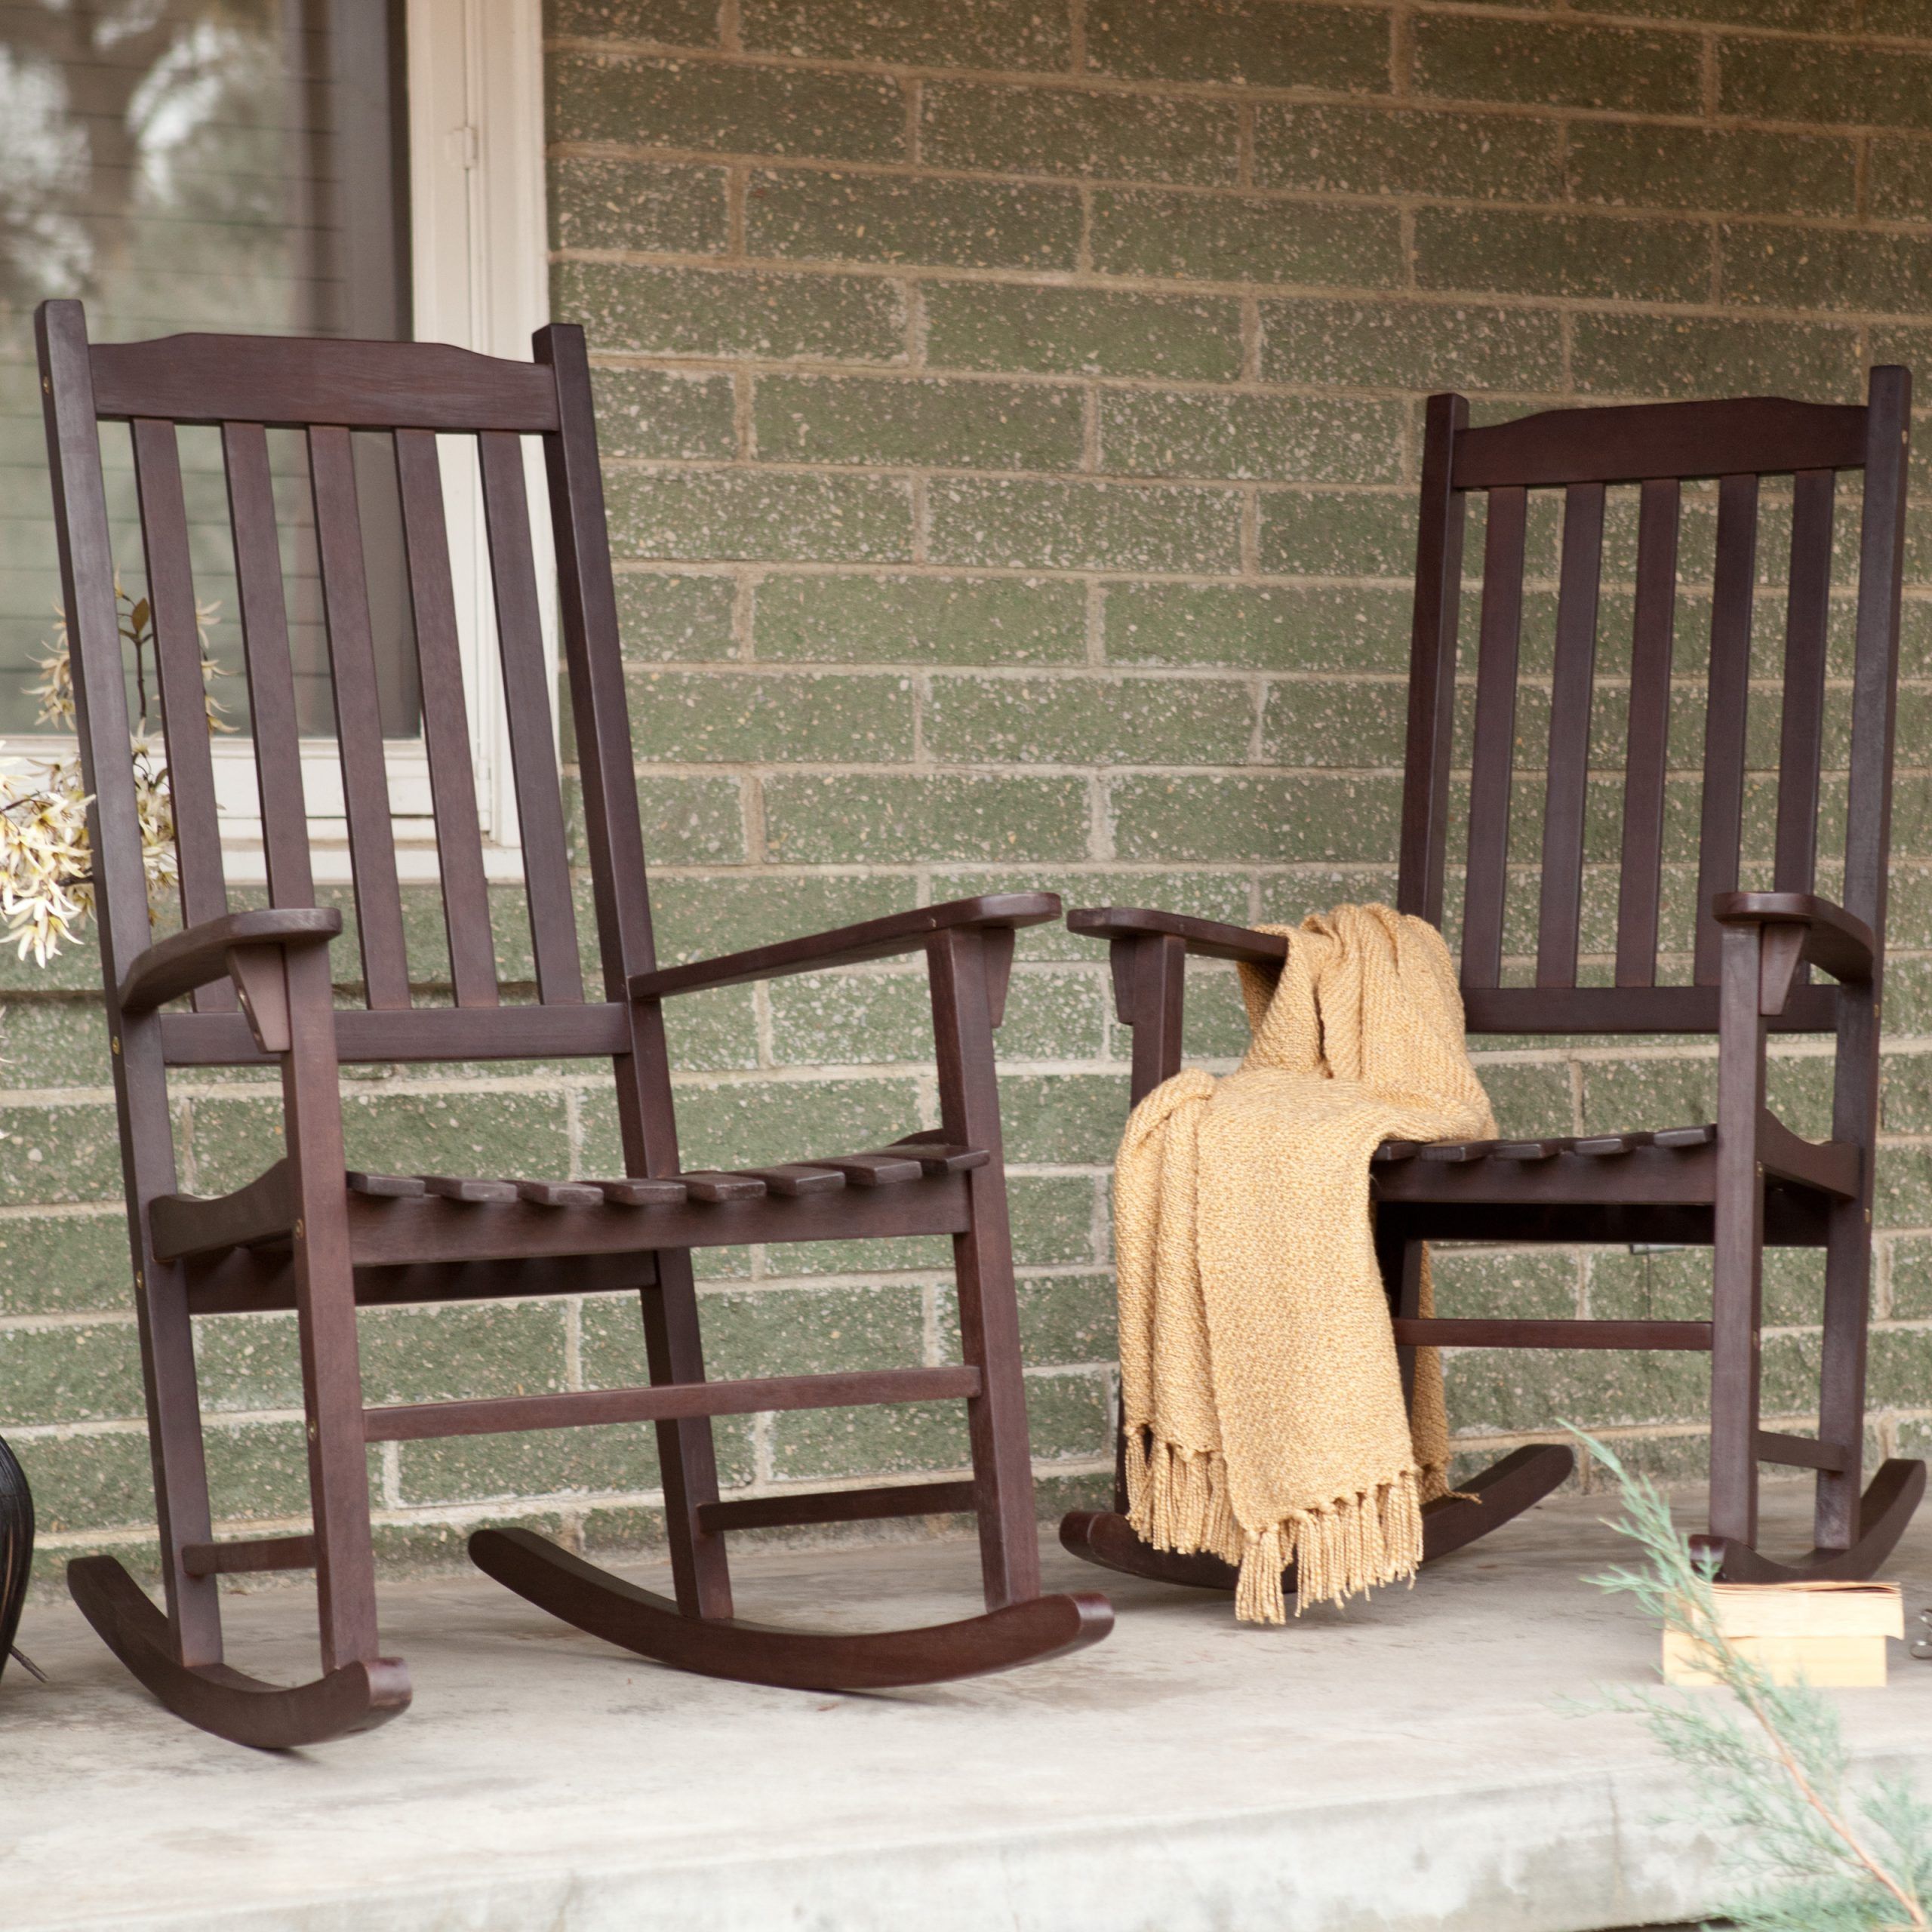 Coral Coast Indoor/outdoor Mission Slat Rocking Chairs – Dark Brown Regarding Most Popular Dark Wood Outdoor Chairs (View 14 of 15)